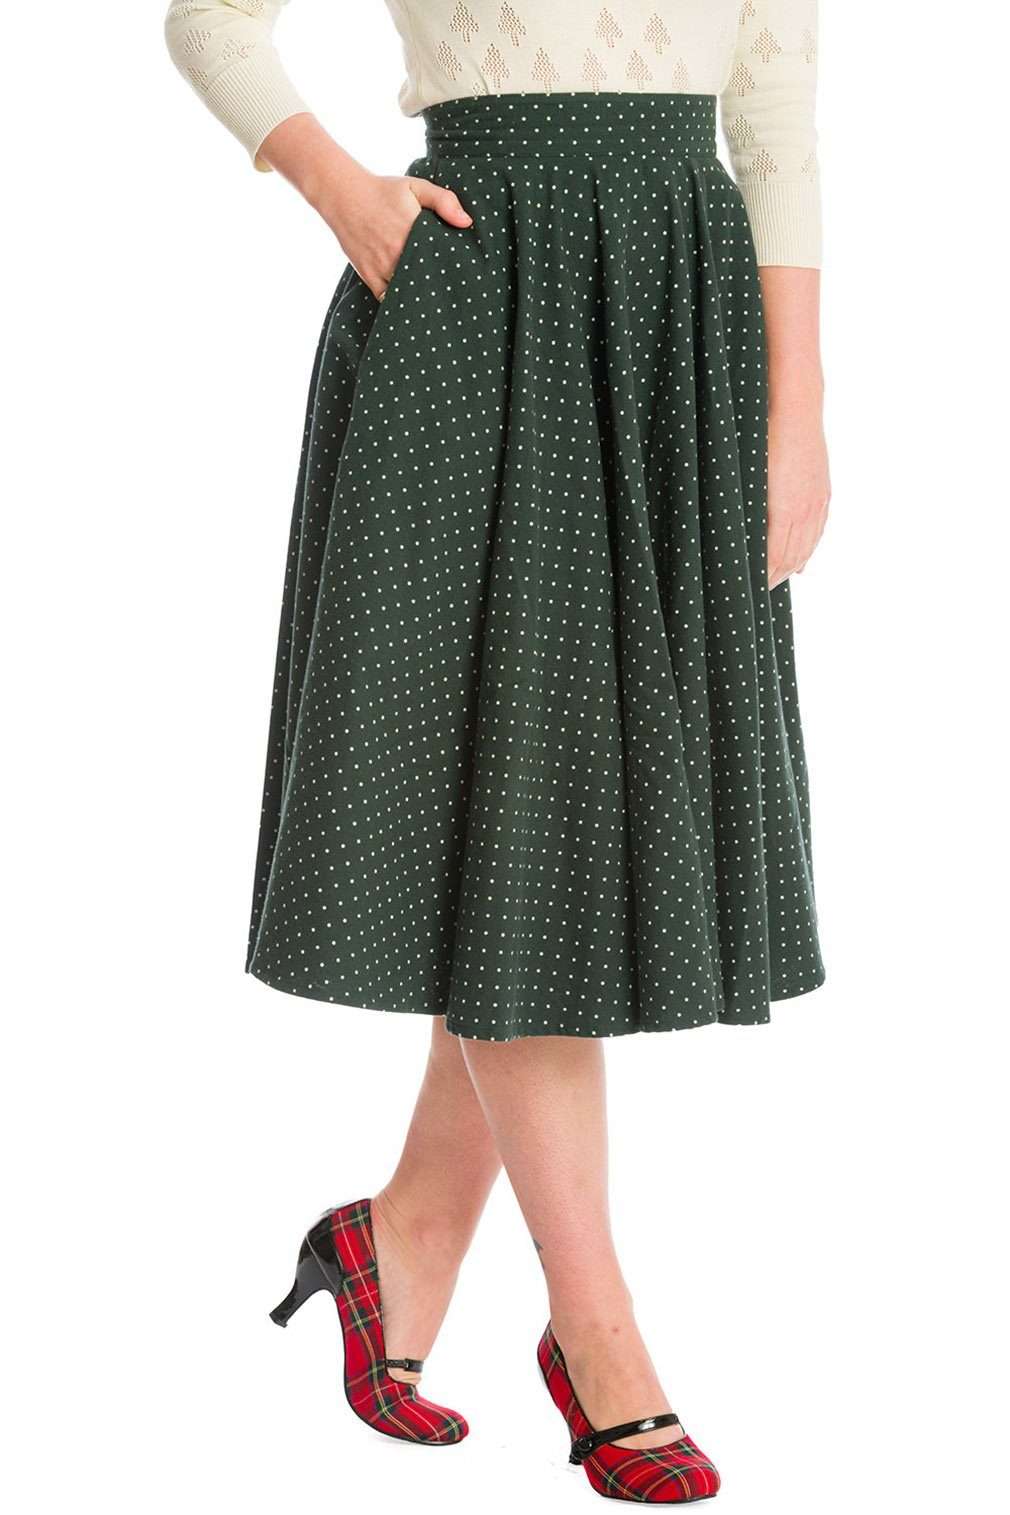 Юбка-трапеция Cosy Spot Зеленая винтажная распашная юбка в стиле ретро